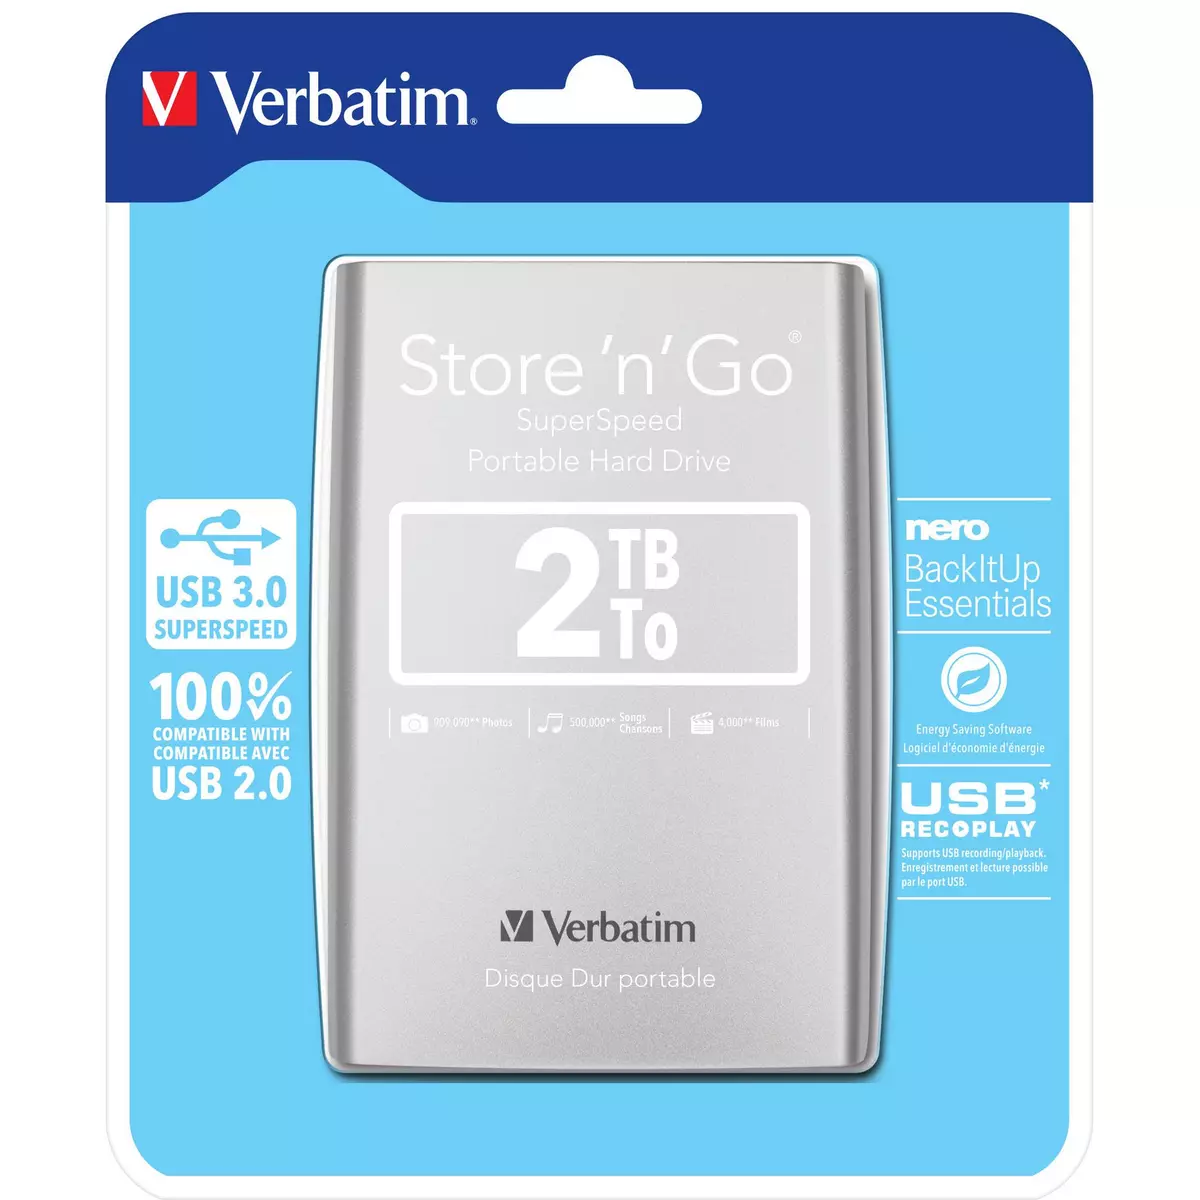 Solde + Promo, le HDD externe 2To Verbatim Store 'n' Go USB 3.0 à 85 €,  livraison offerte ! (terminée) - GinjFo